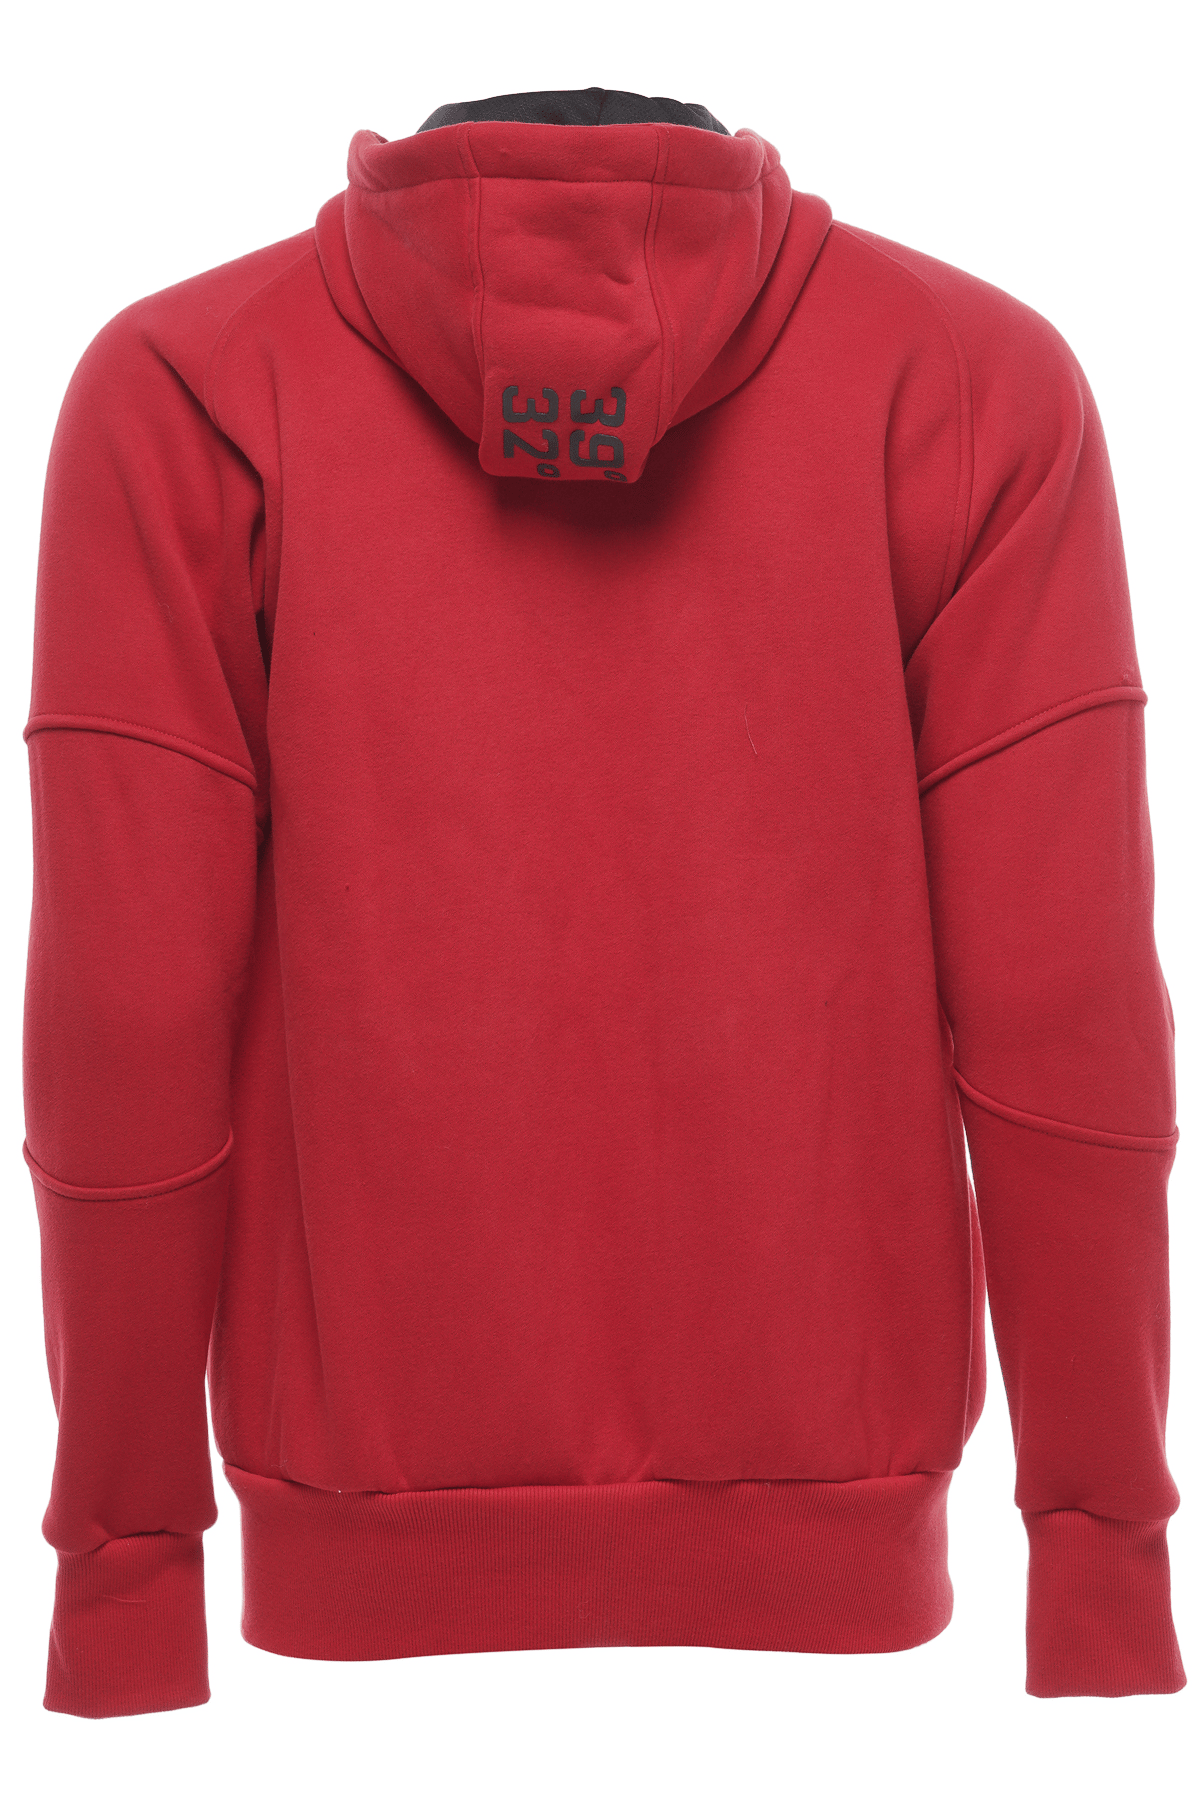 Modelli Sweatshirt (Kırmızı)